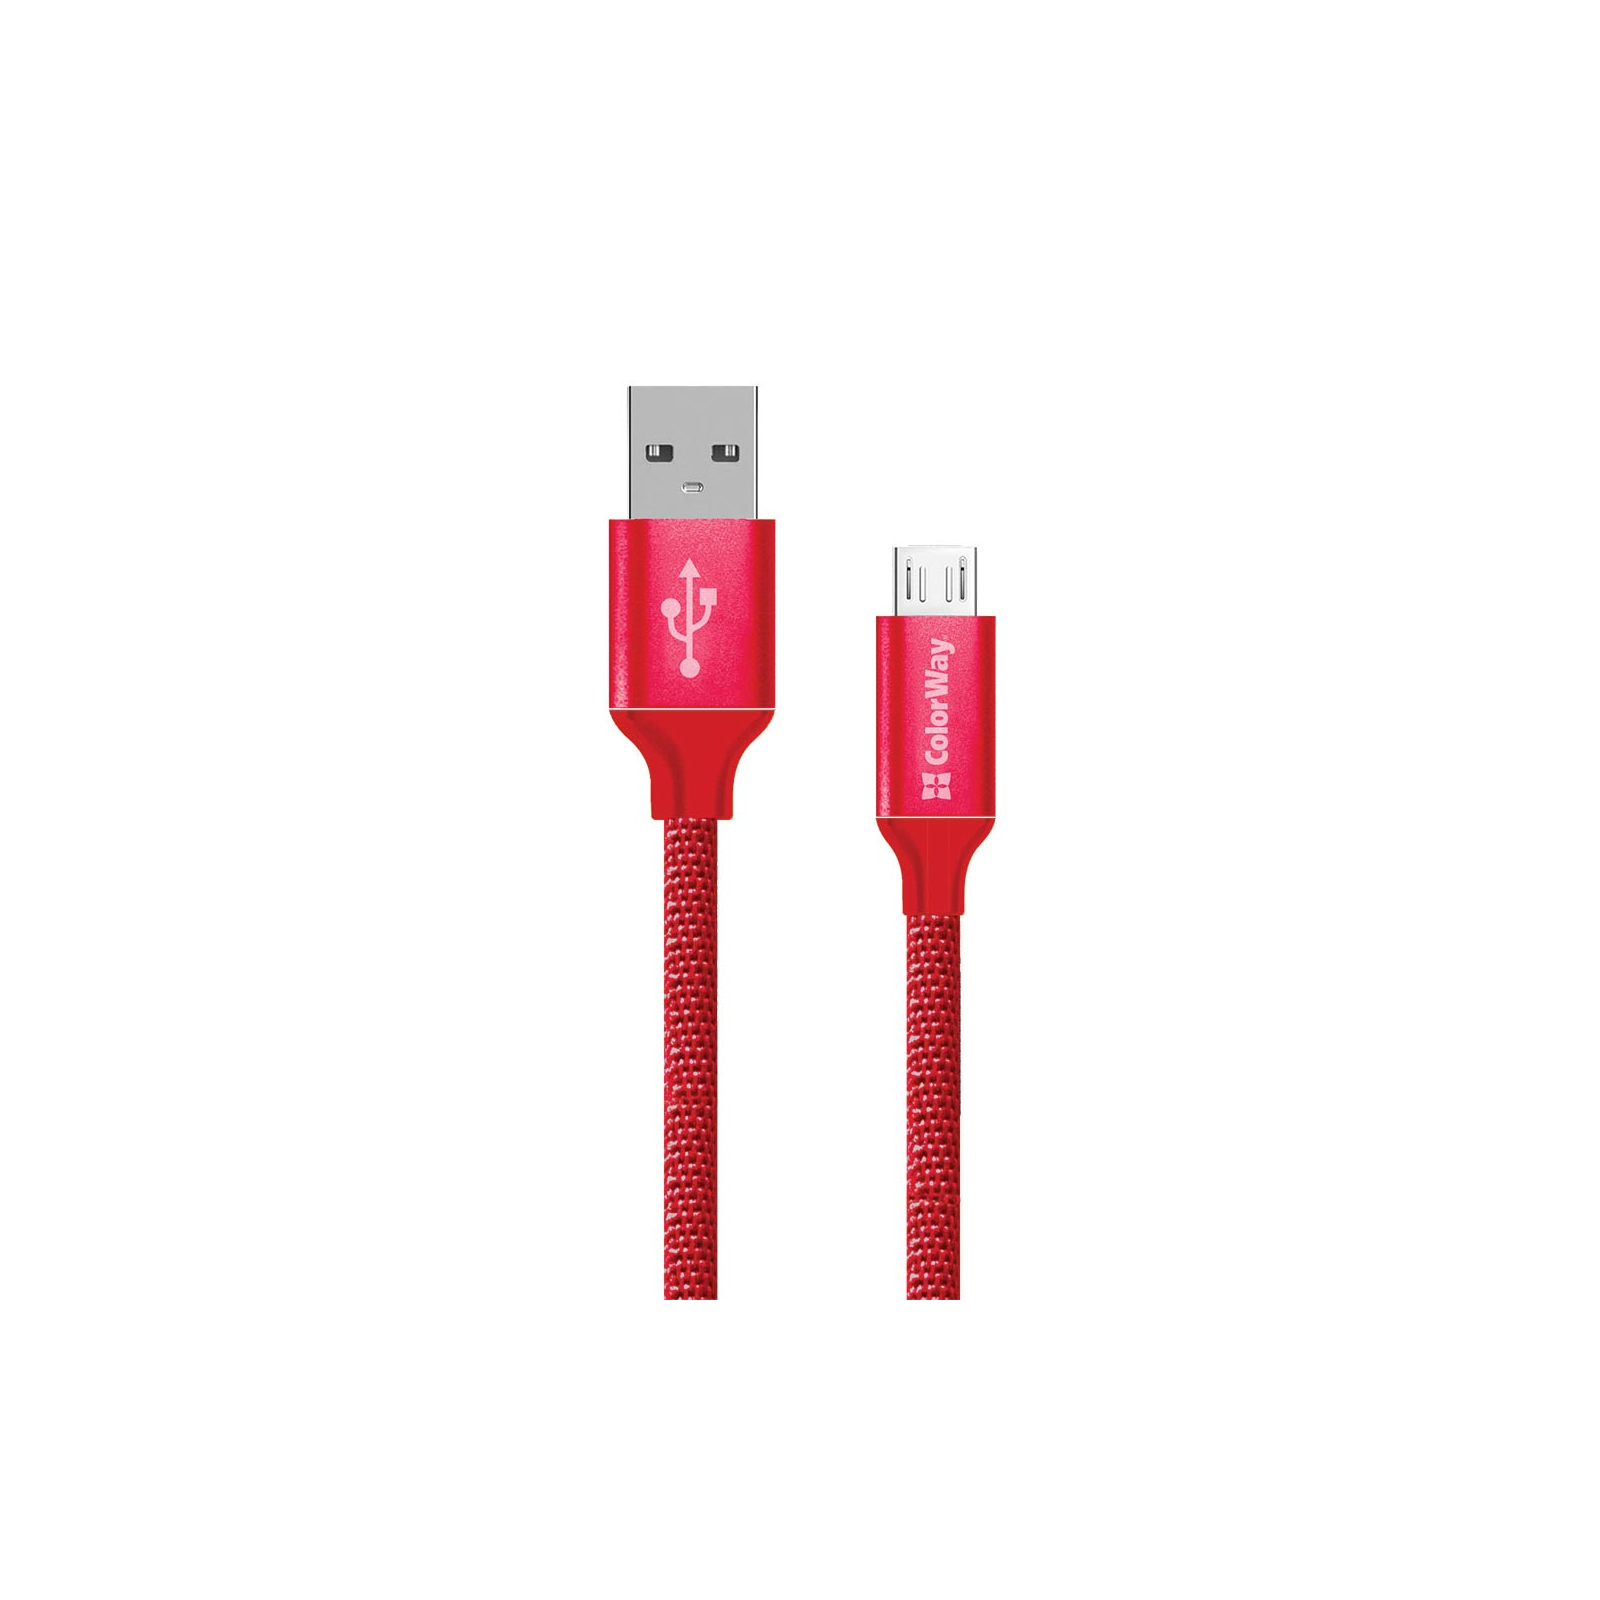 Дата кабель USB 2.0 AM to Micro 5P 2.0m mint ColorWay (CW-CBUM009-MT)